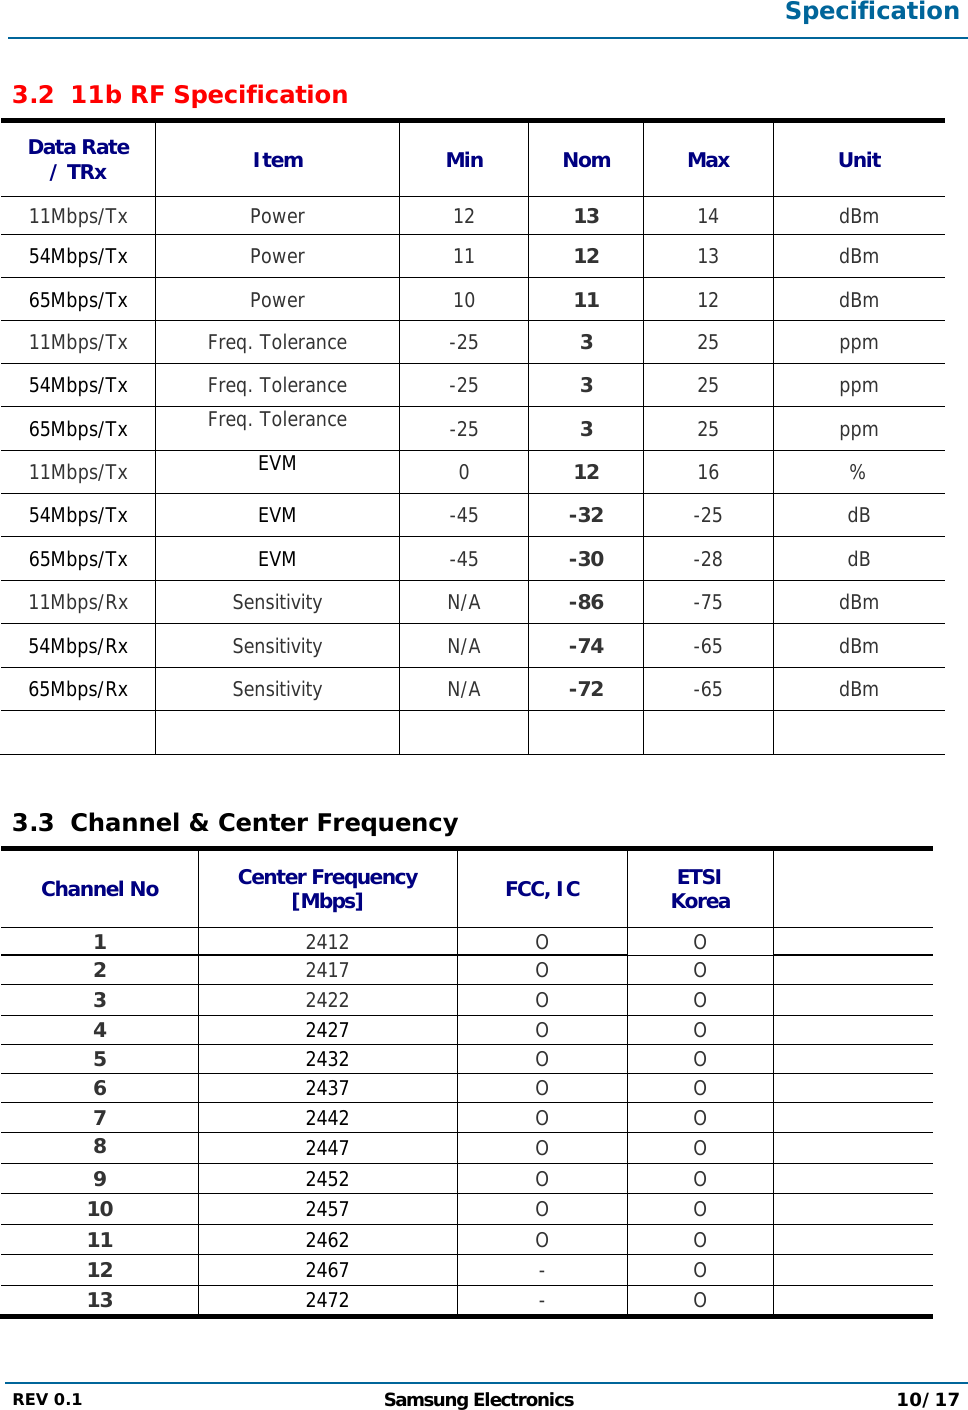  Specification  REV 0.1  Samsung Electronics 10/17  3.2 11b RF Specification  Data Rate / TRx  Item Min Nom Max Unit 11Mbps/Tx Power 12 13  14 dBm 54Mbps/Tx  Power 11 12  13 dBm 65Mbps/Tx  Power 10  11  12 dBm 11Mbps/Tx Freq. Tolerance  -25  3  25 ppm 54Mbps/Tx  Freq. Tolerance  -25  3  25 ppm 65Mbps/Tx  Freq. Tolerance -25  3  25 ppm 11Mbps/Tx EVM  0  12  16 % 54Mbps/Tx EVM  -45  -32  -25 dB 65Mbps/Tx EVM  -45  -30  -28 dB 11Mbps/Rx Sensitivity N/A -86  -75 dBm 54Mbps/Rx  Sensitivity N/A -74  -65 dBm 65Mbps/Rx  Sensitivity N/A  -72  -65 dBm        3.3 Channel &amp; Center Frequency Channel No  Center Frequency [Mbps]  FCC, IC  ETSI Korea   1 2412 O O  2 2417 O O  3 2422 O O  4 2427  O O  5 2432  O O  6 2437  O O  7 2442  O O  8  2447  O O  9  2452  O O  10  2457  O O  11  2462  O O  12  2467  - O  13  2472  - O   